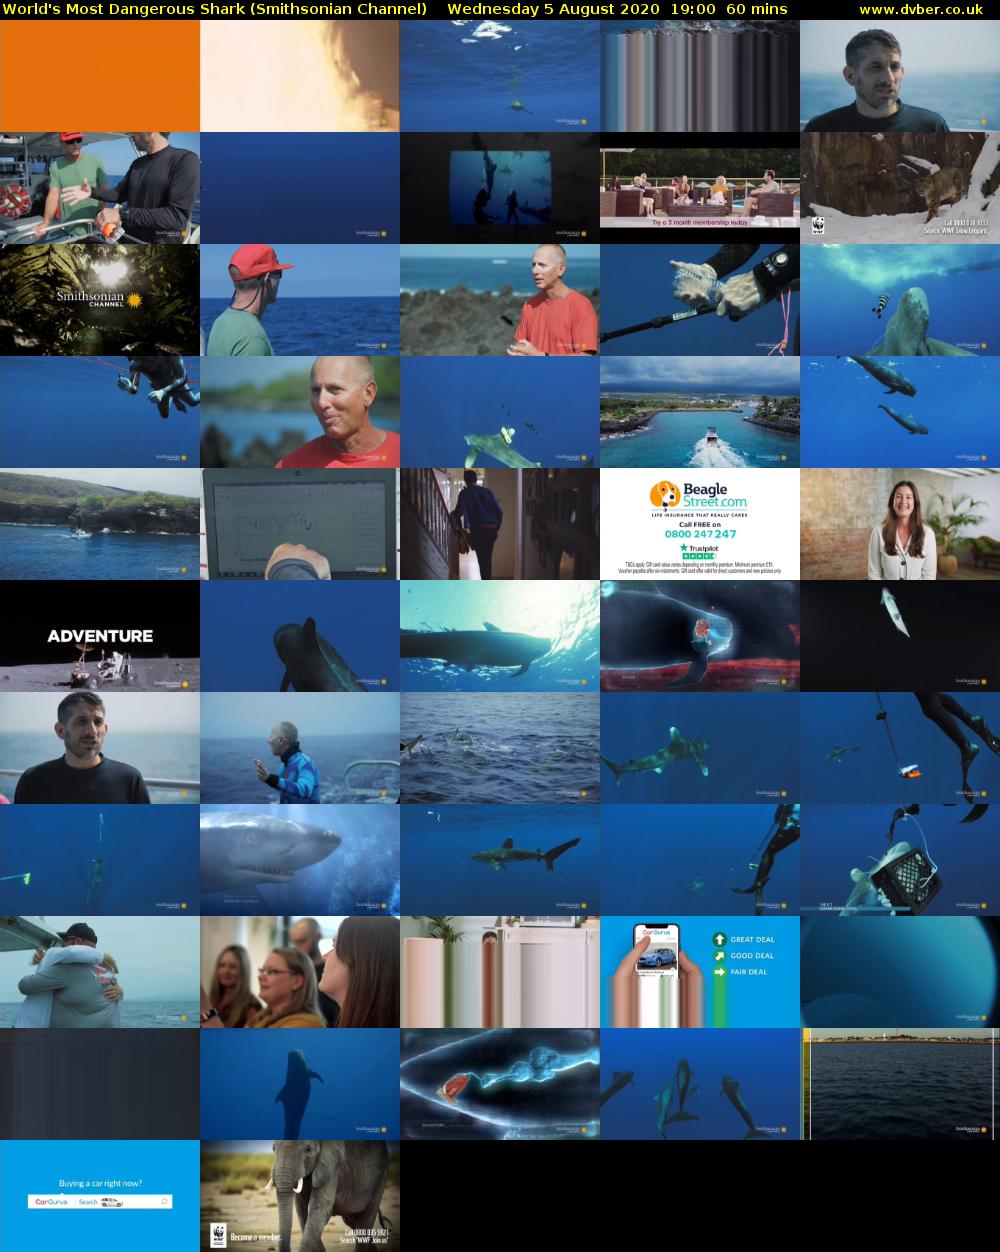 World's Most Dangerous Shark (Smithsonian Channel) Wednesday 5 August 2020 19:00 - 20:00